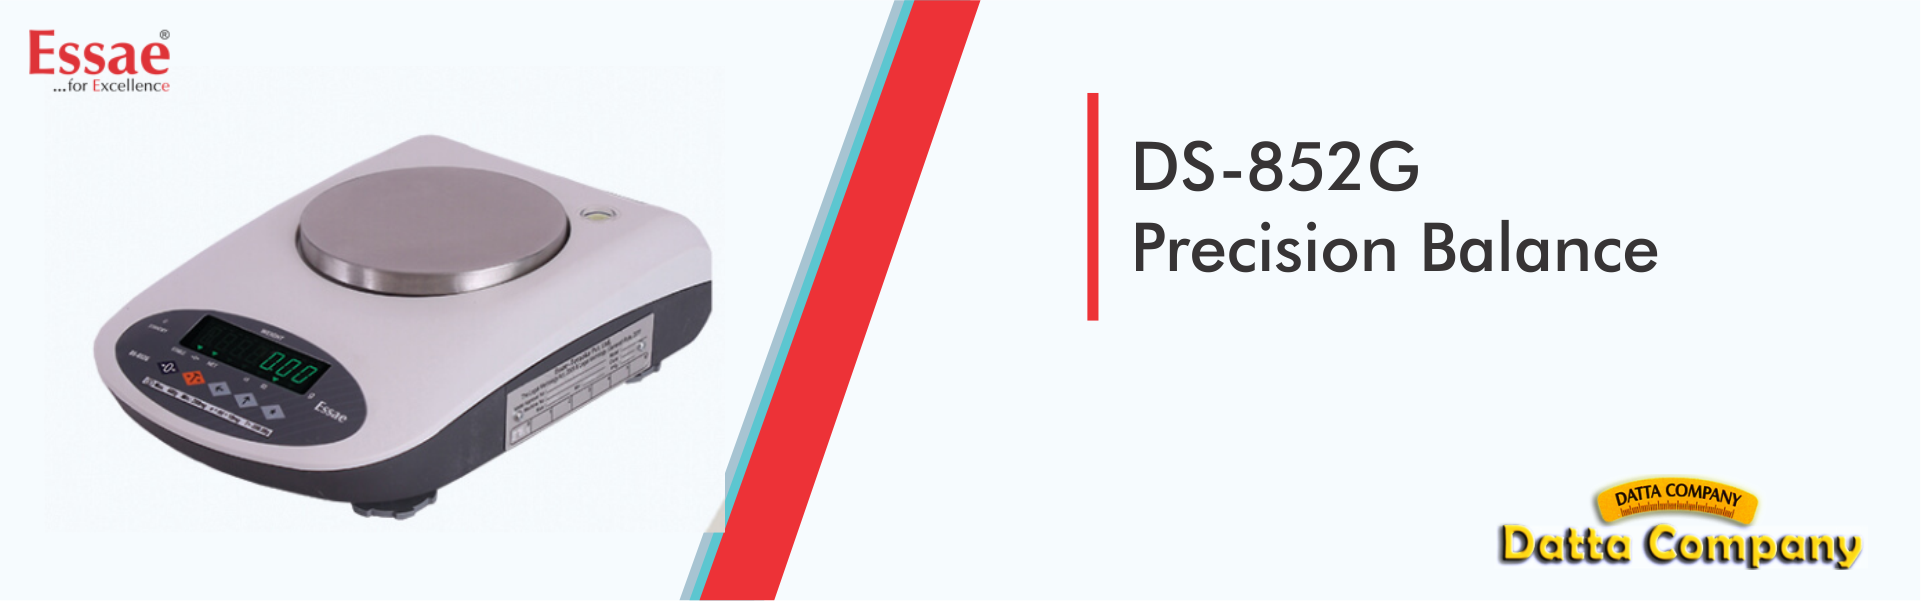 DS-852G Precision Balance